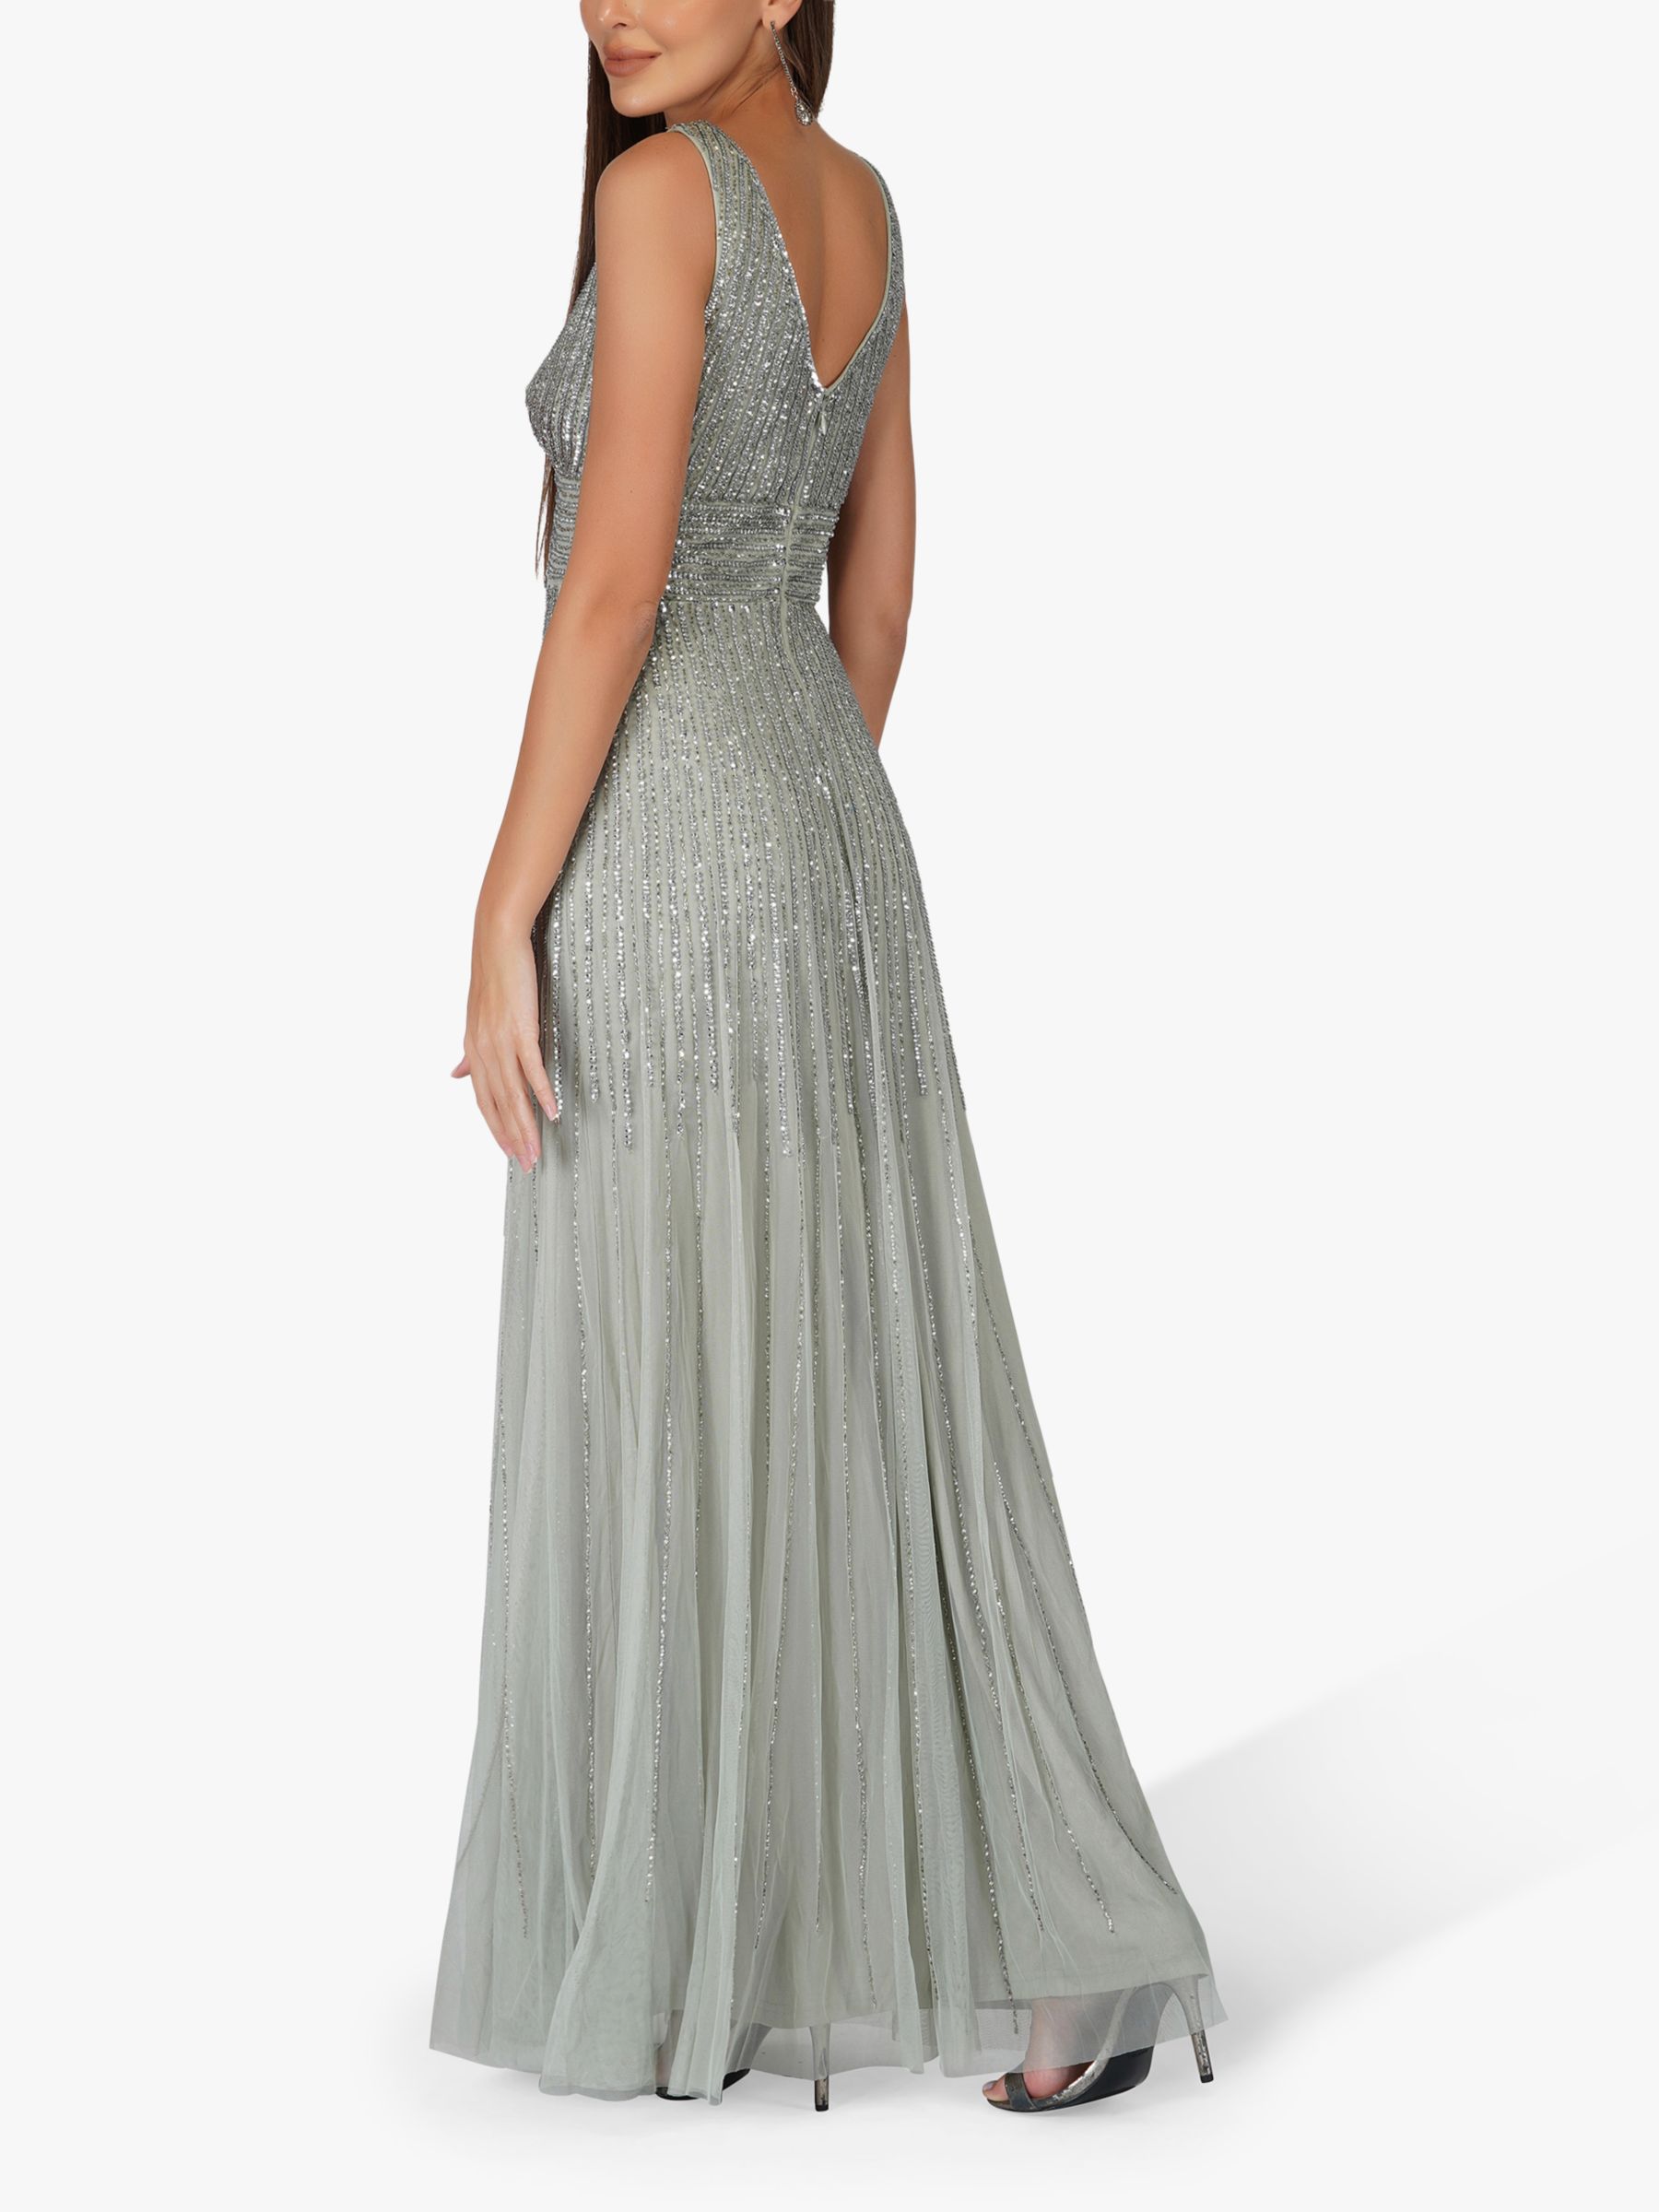 Lace & Beads Lorelai Embellished Maxi Dress, Sage Grey, 6